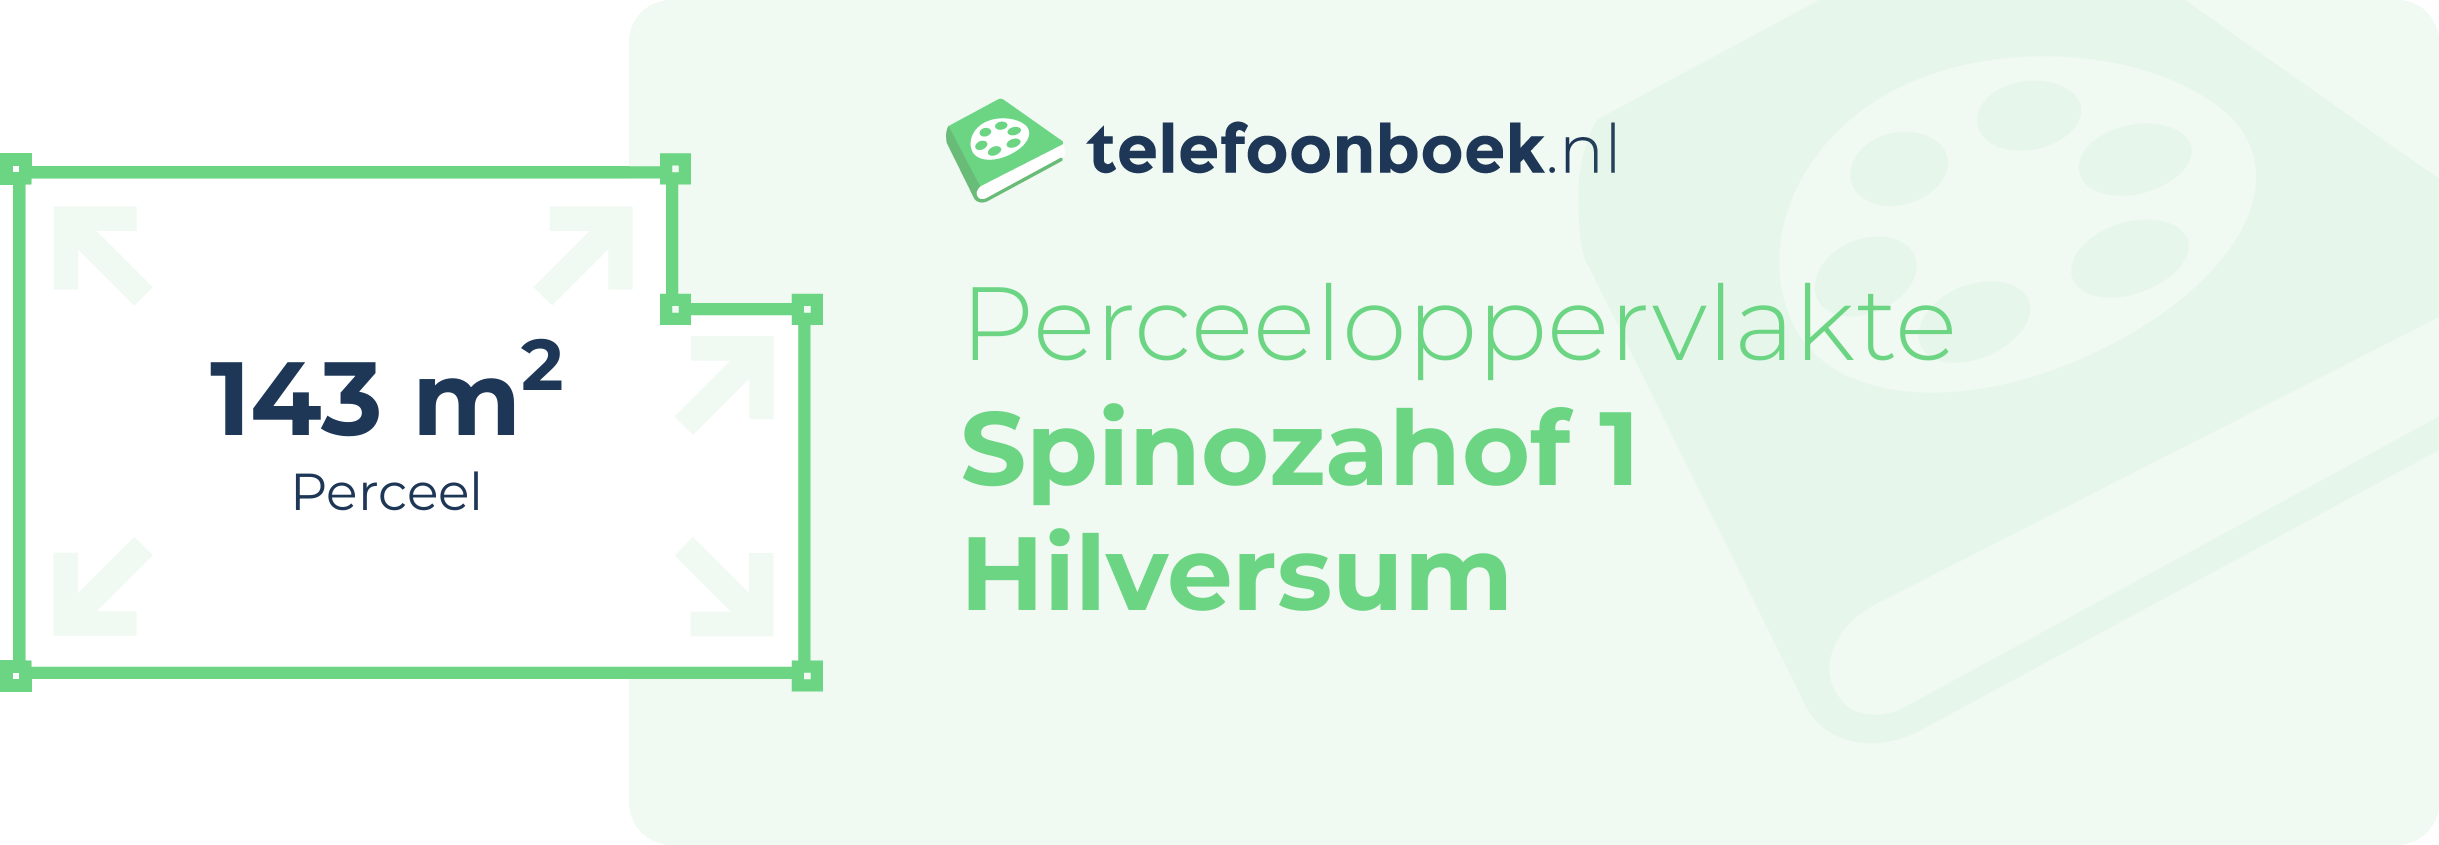 Perceeloppervlakte Spinozahof 1 Hilversum